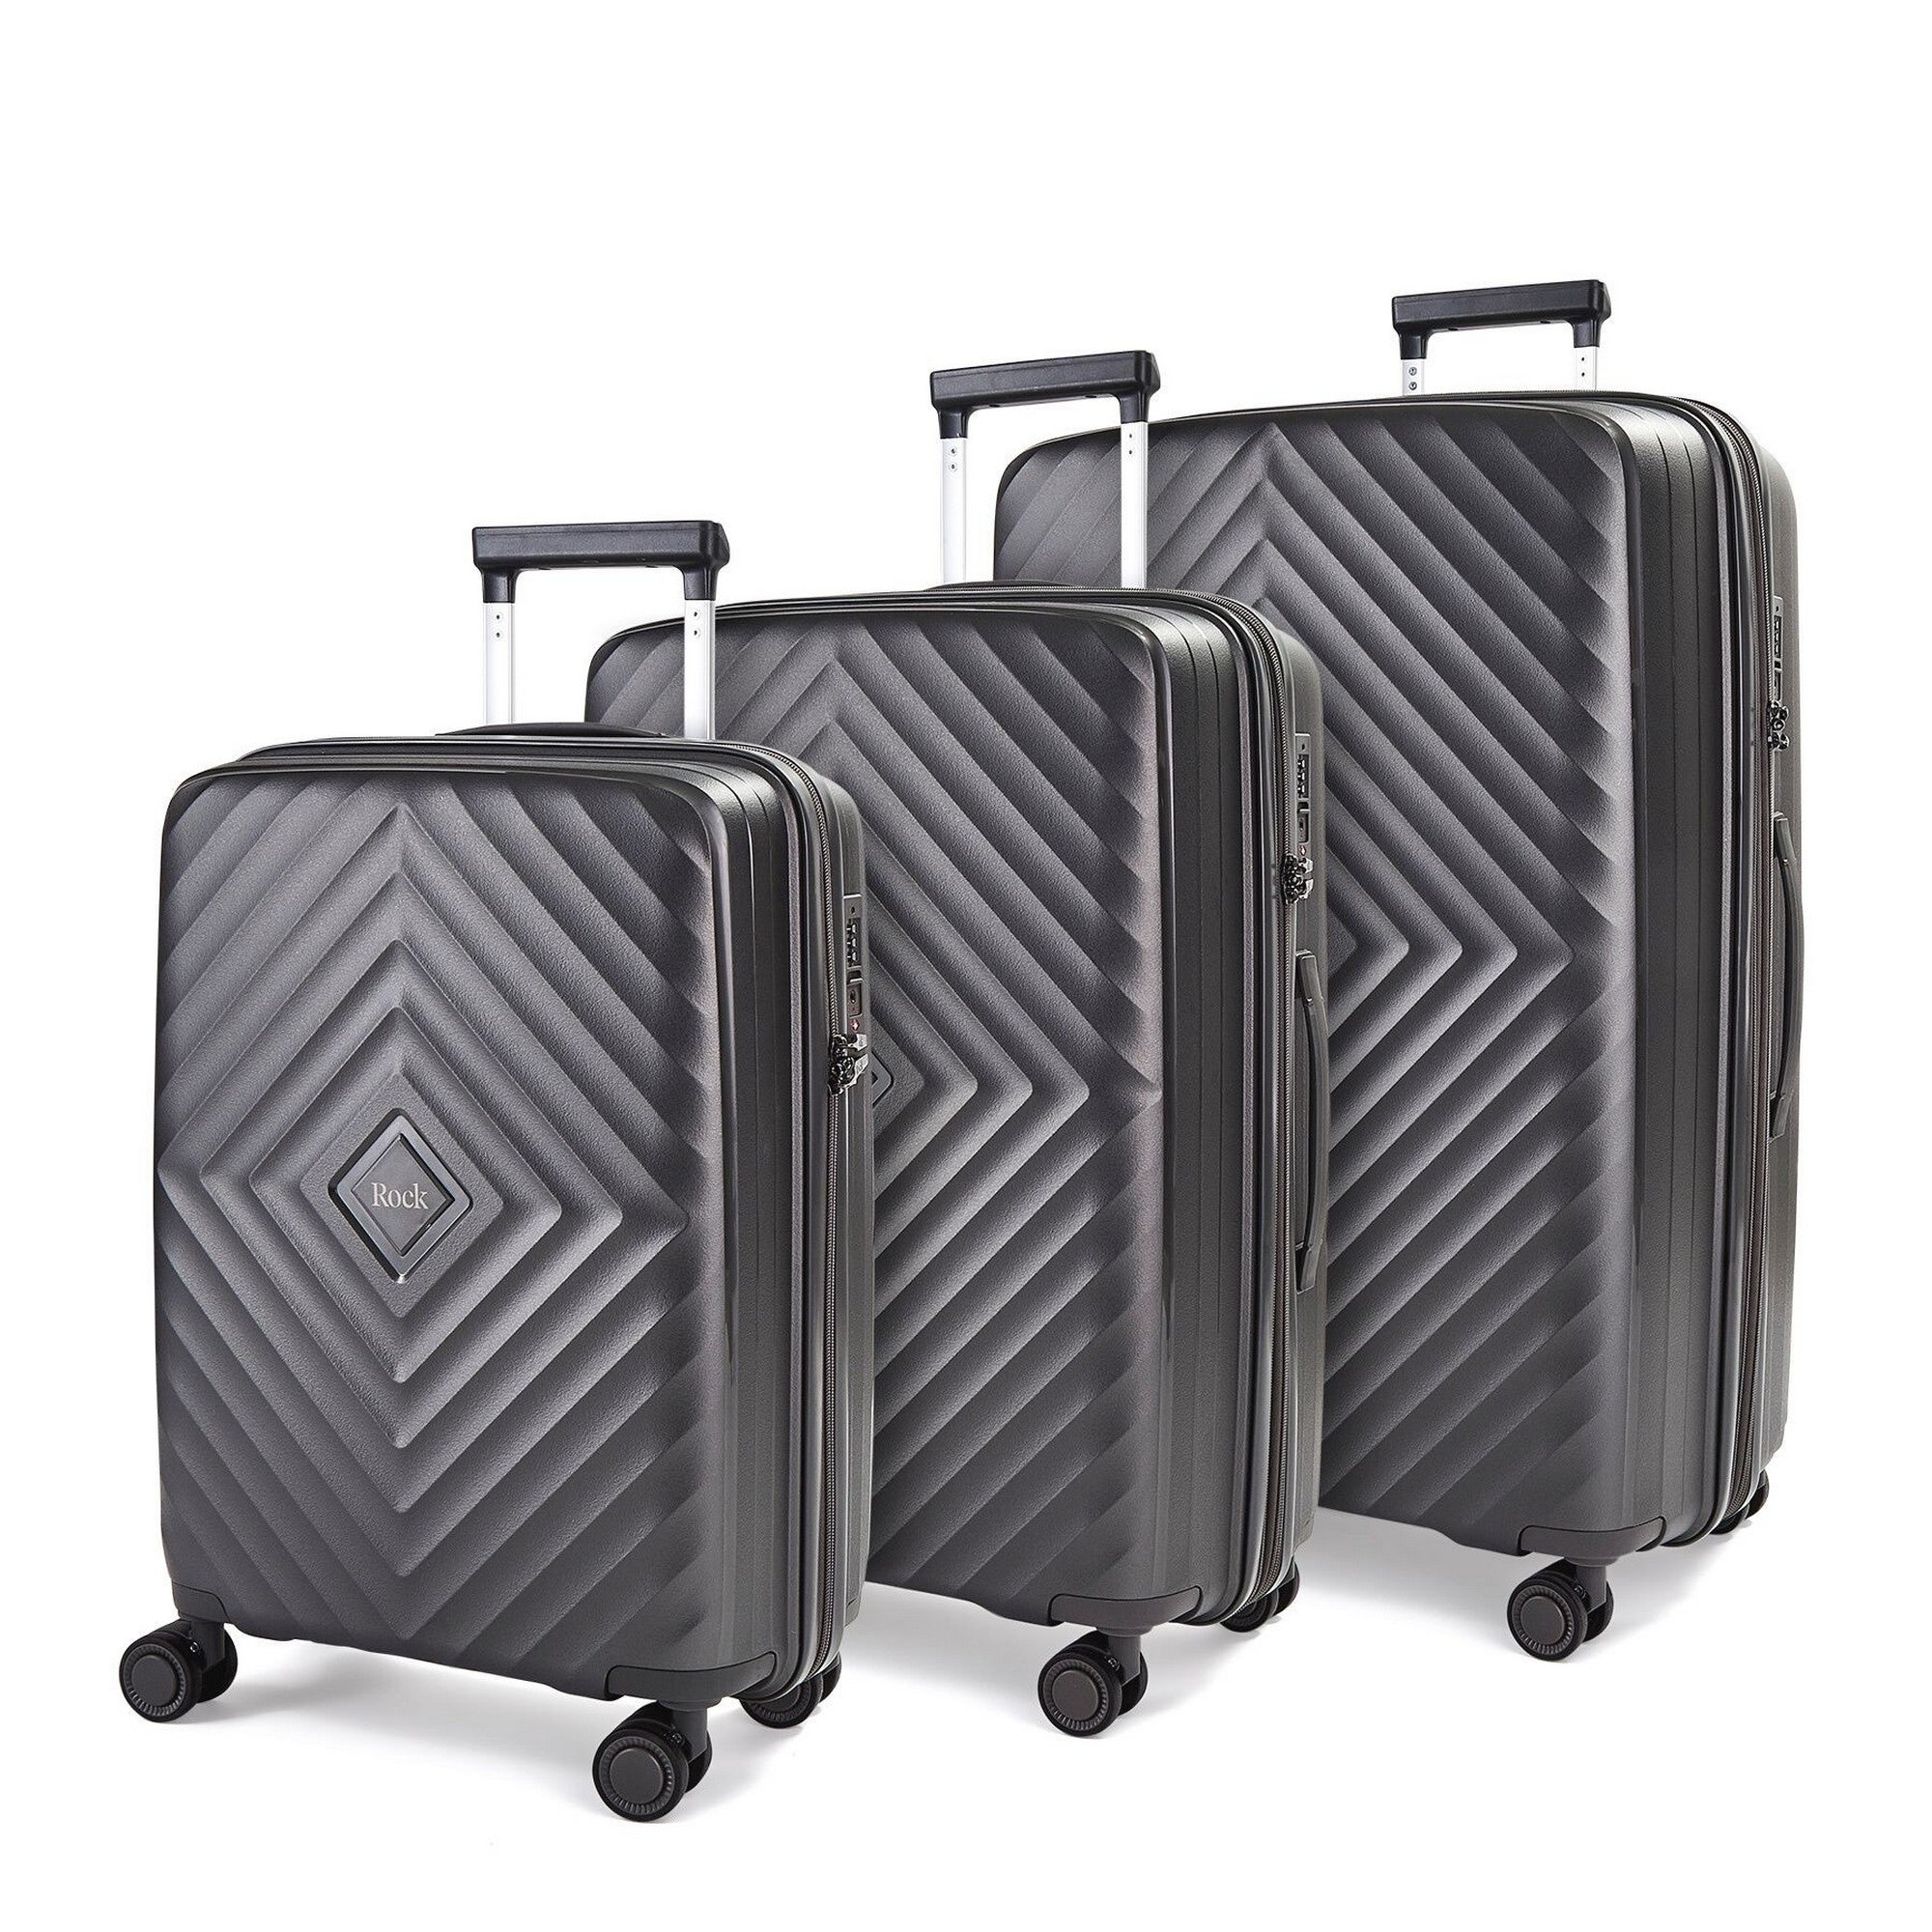 Rock Luggage Infinity Set of 3 Suitcases Charcoal